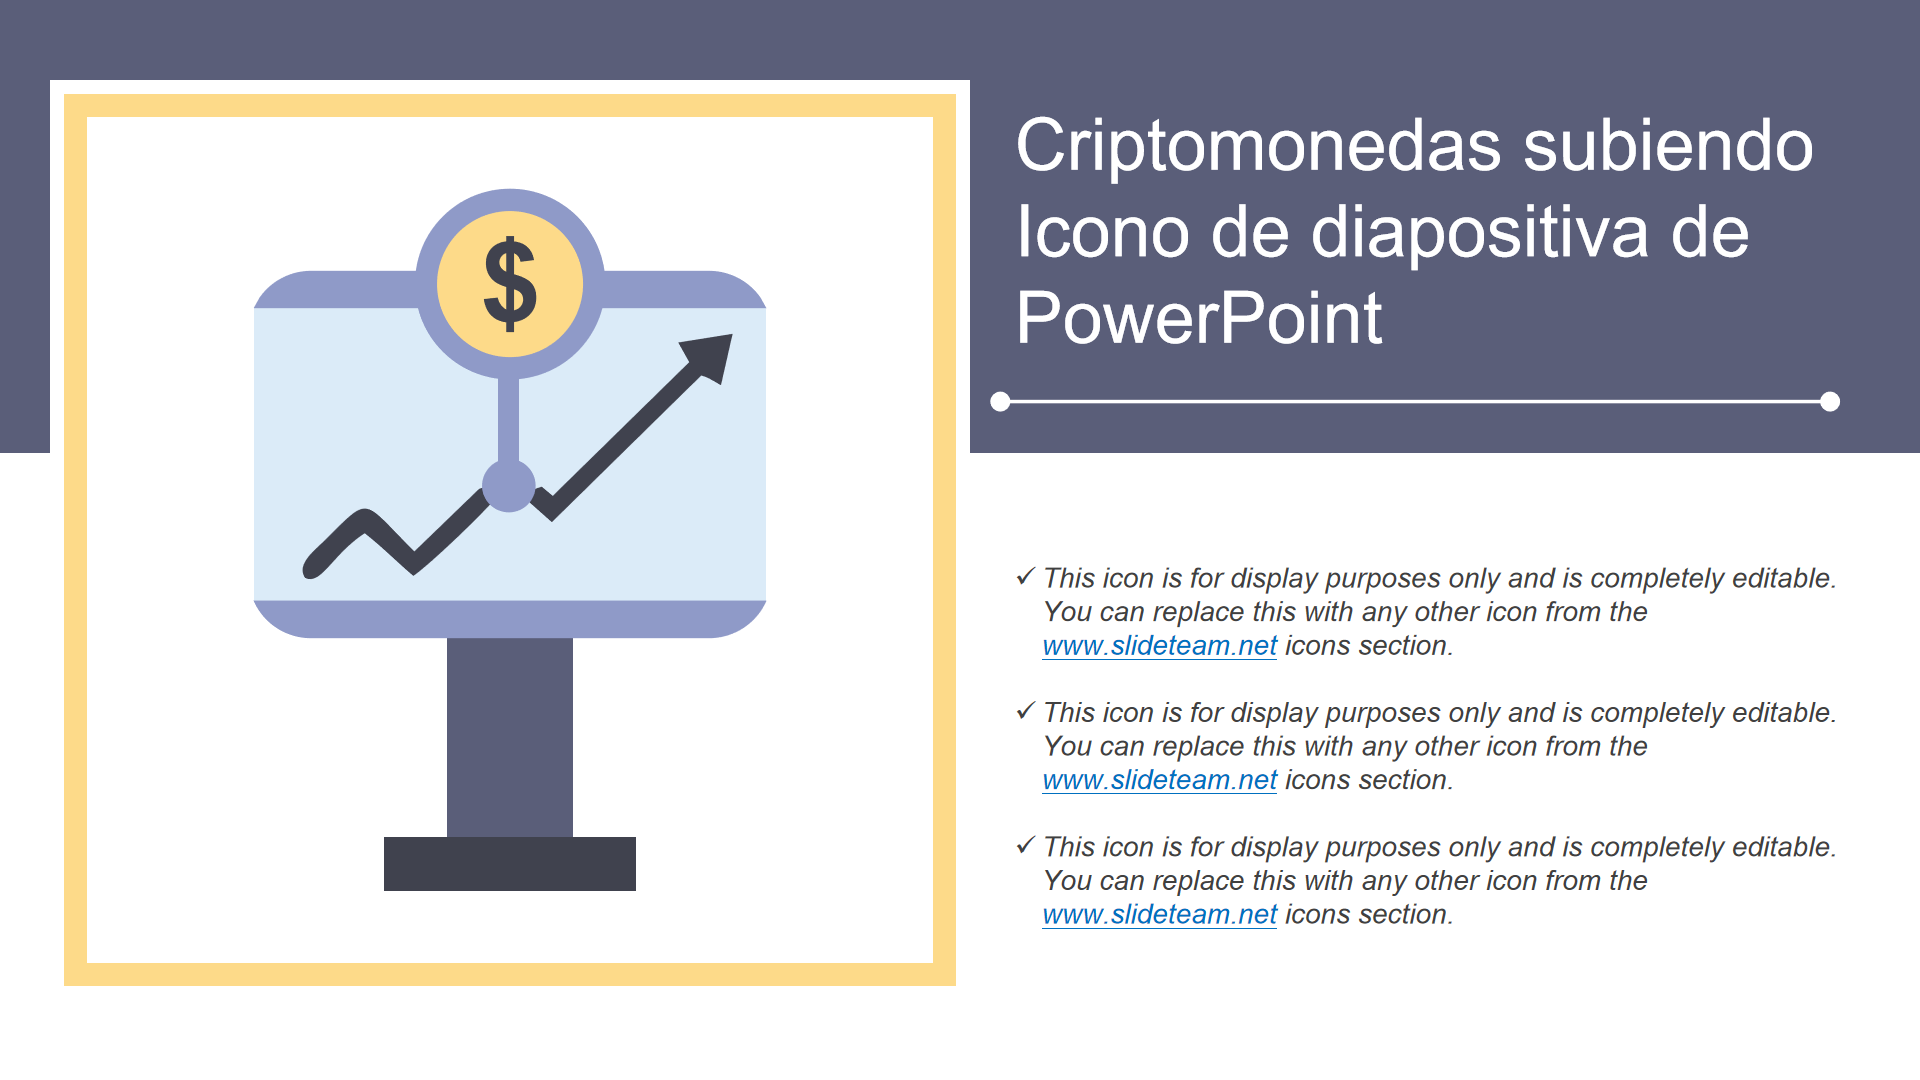 Criptomonedas subiendo Icono de diapositiva de PowerPoint